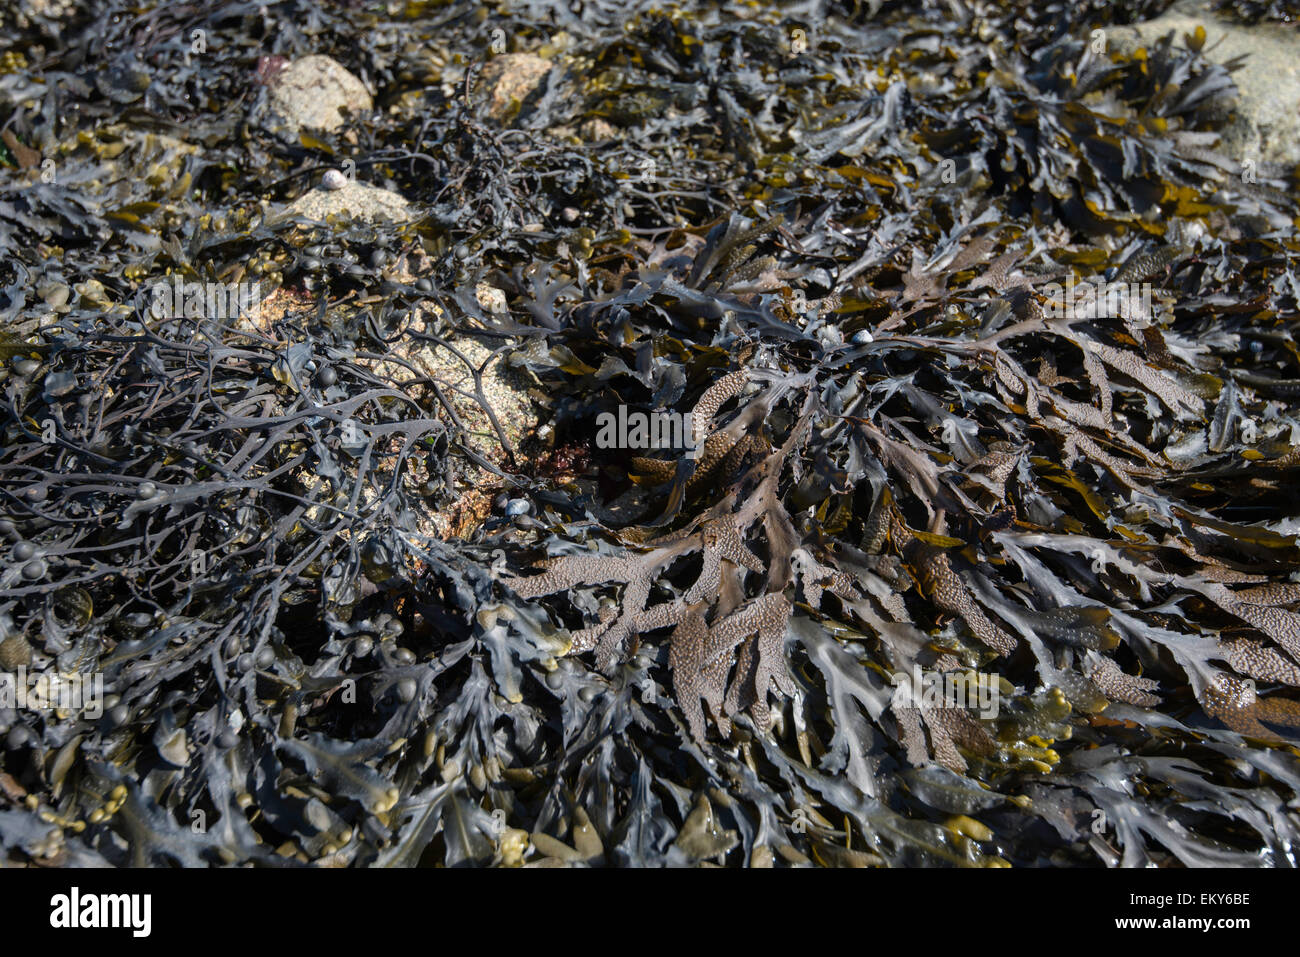 Brown seaweeds on rocky beach. Stock Photo